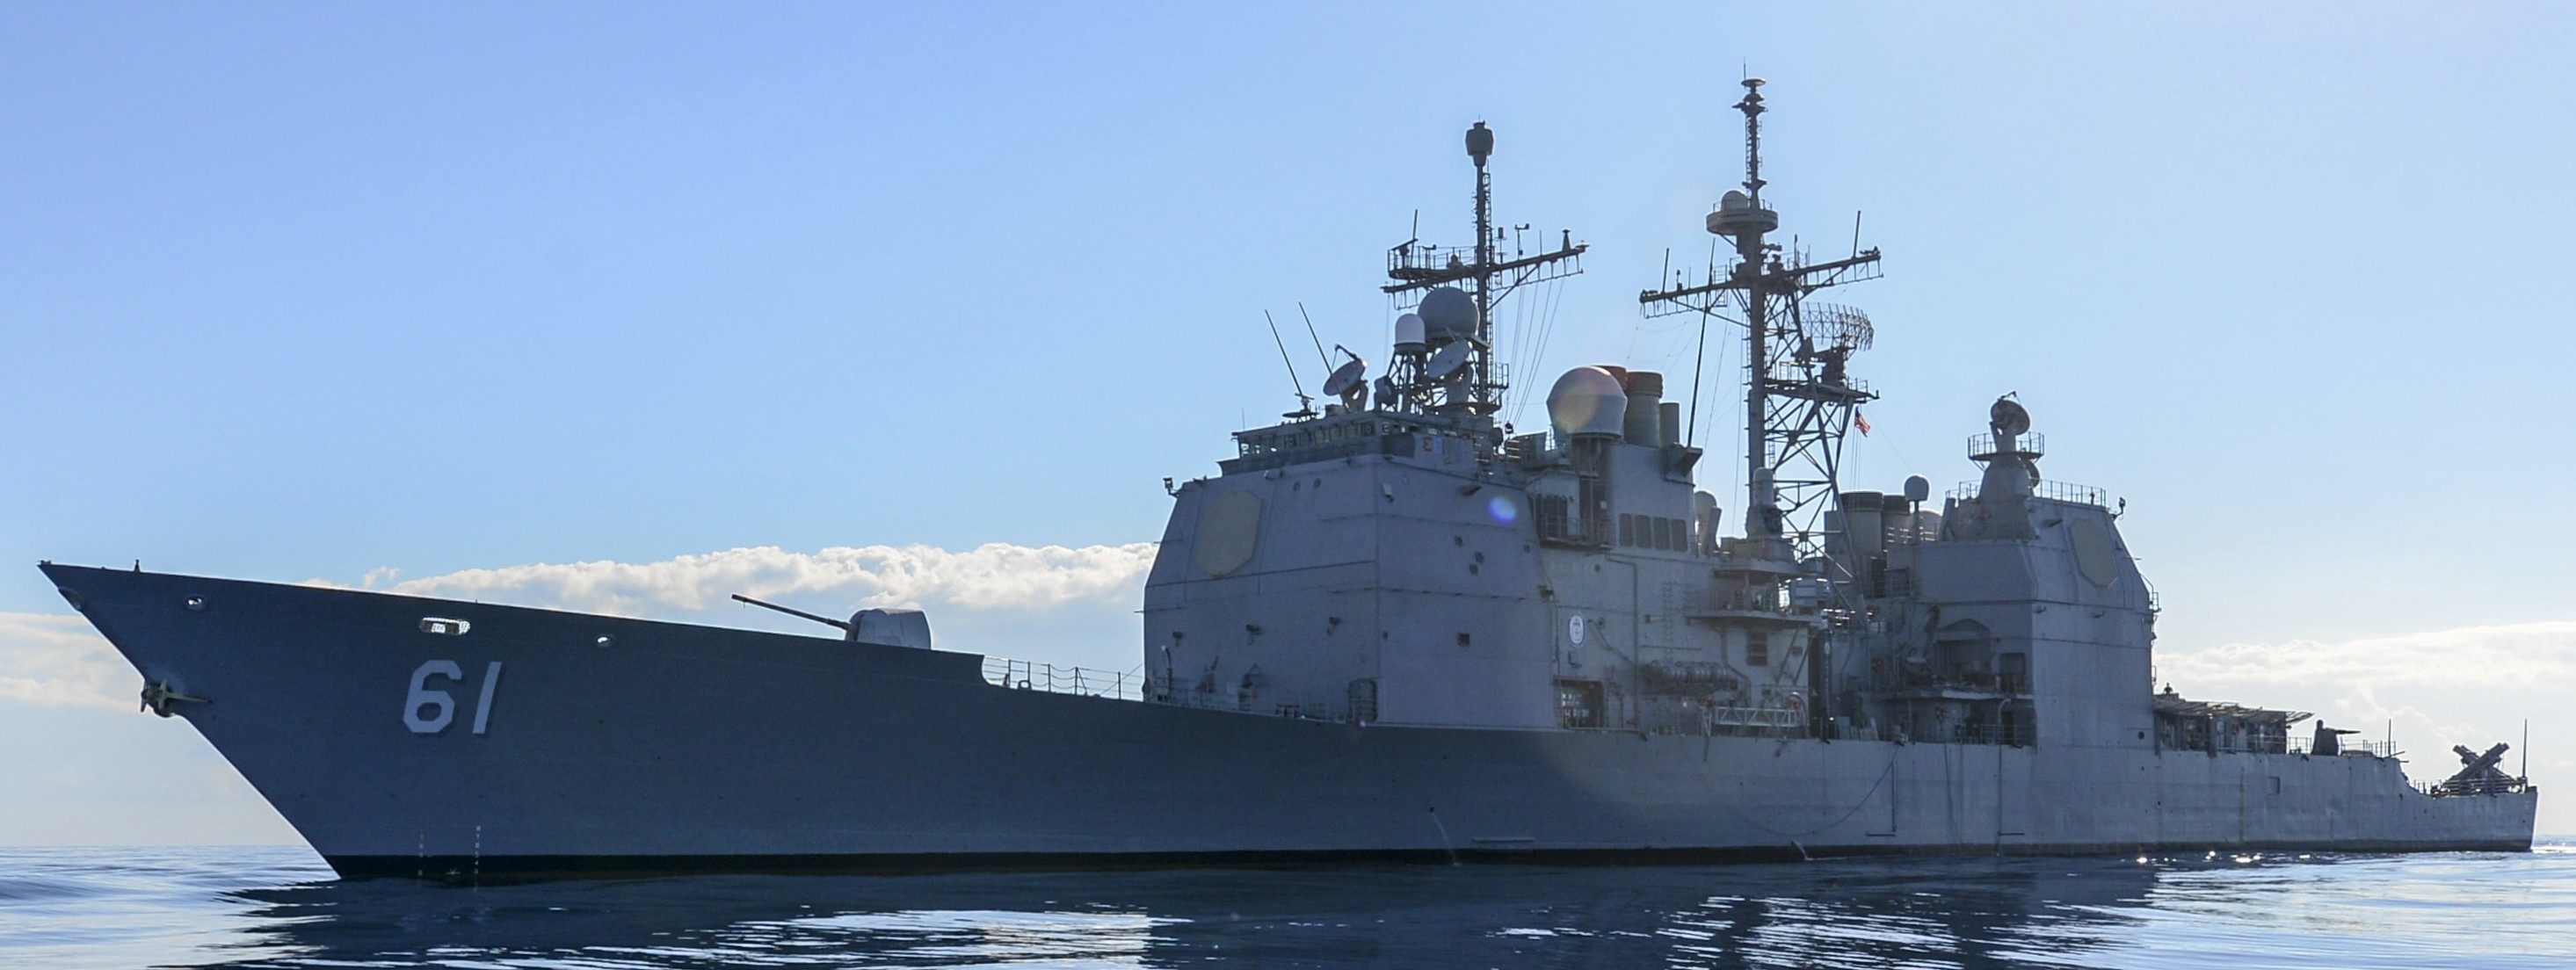 cg-61 uss monterey ticonderoga class guided missile cruiser aegis us navy 69